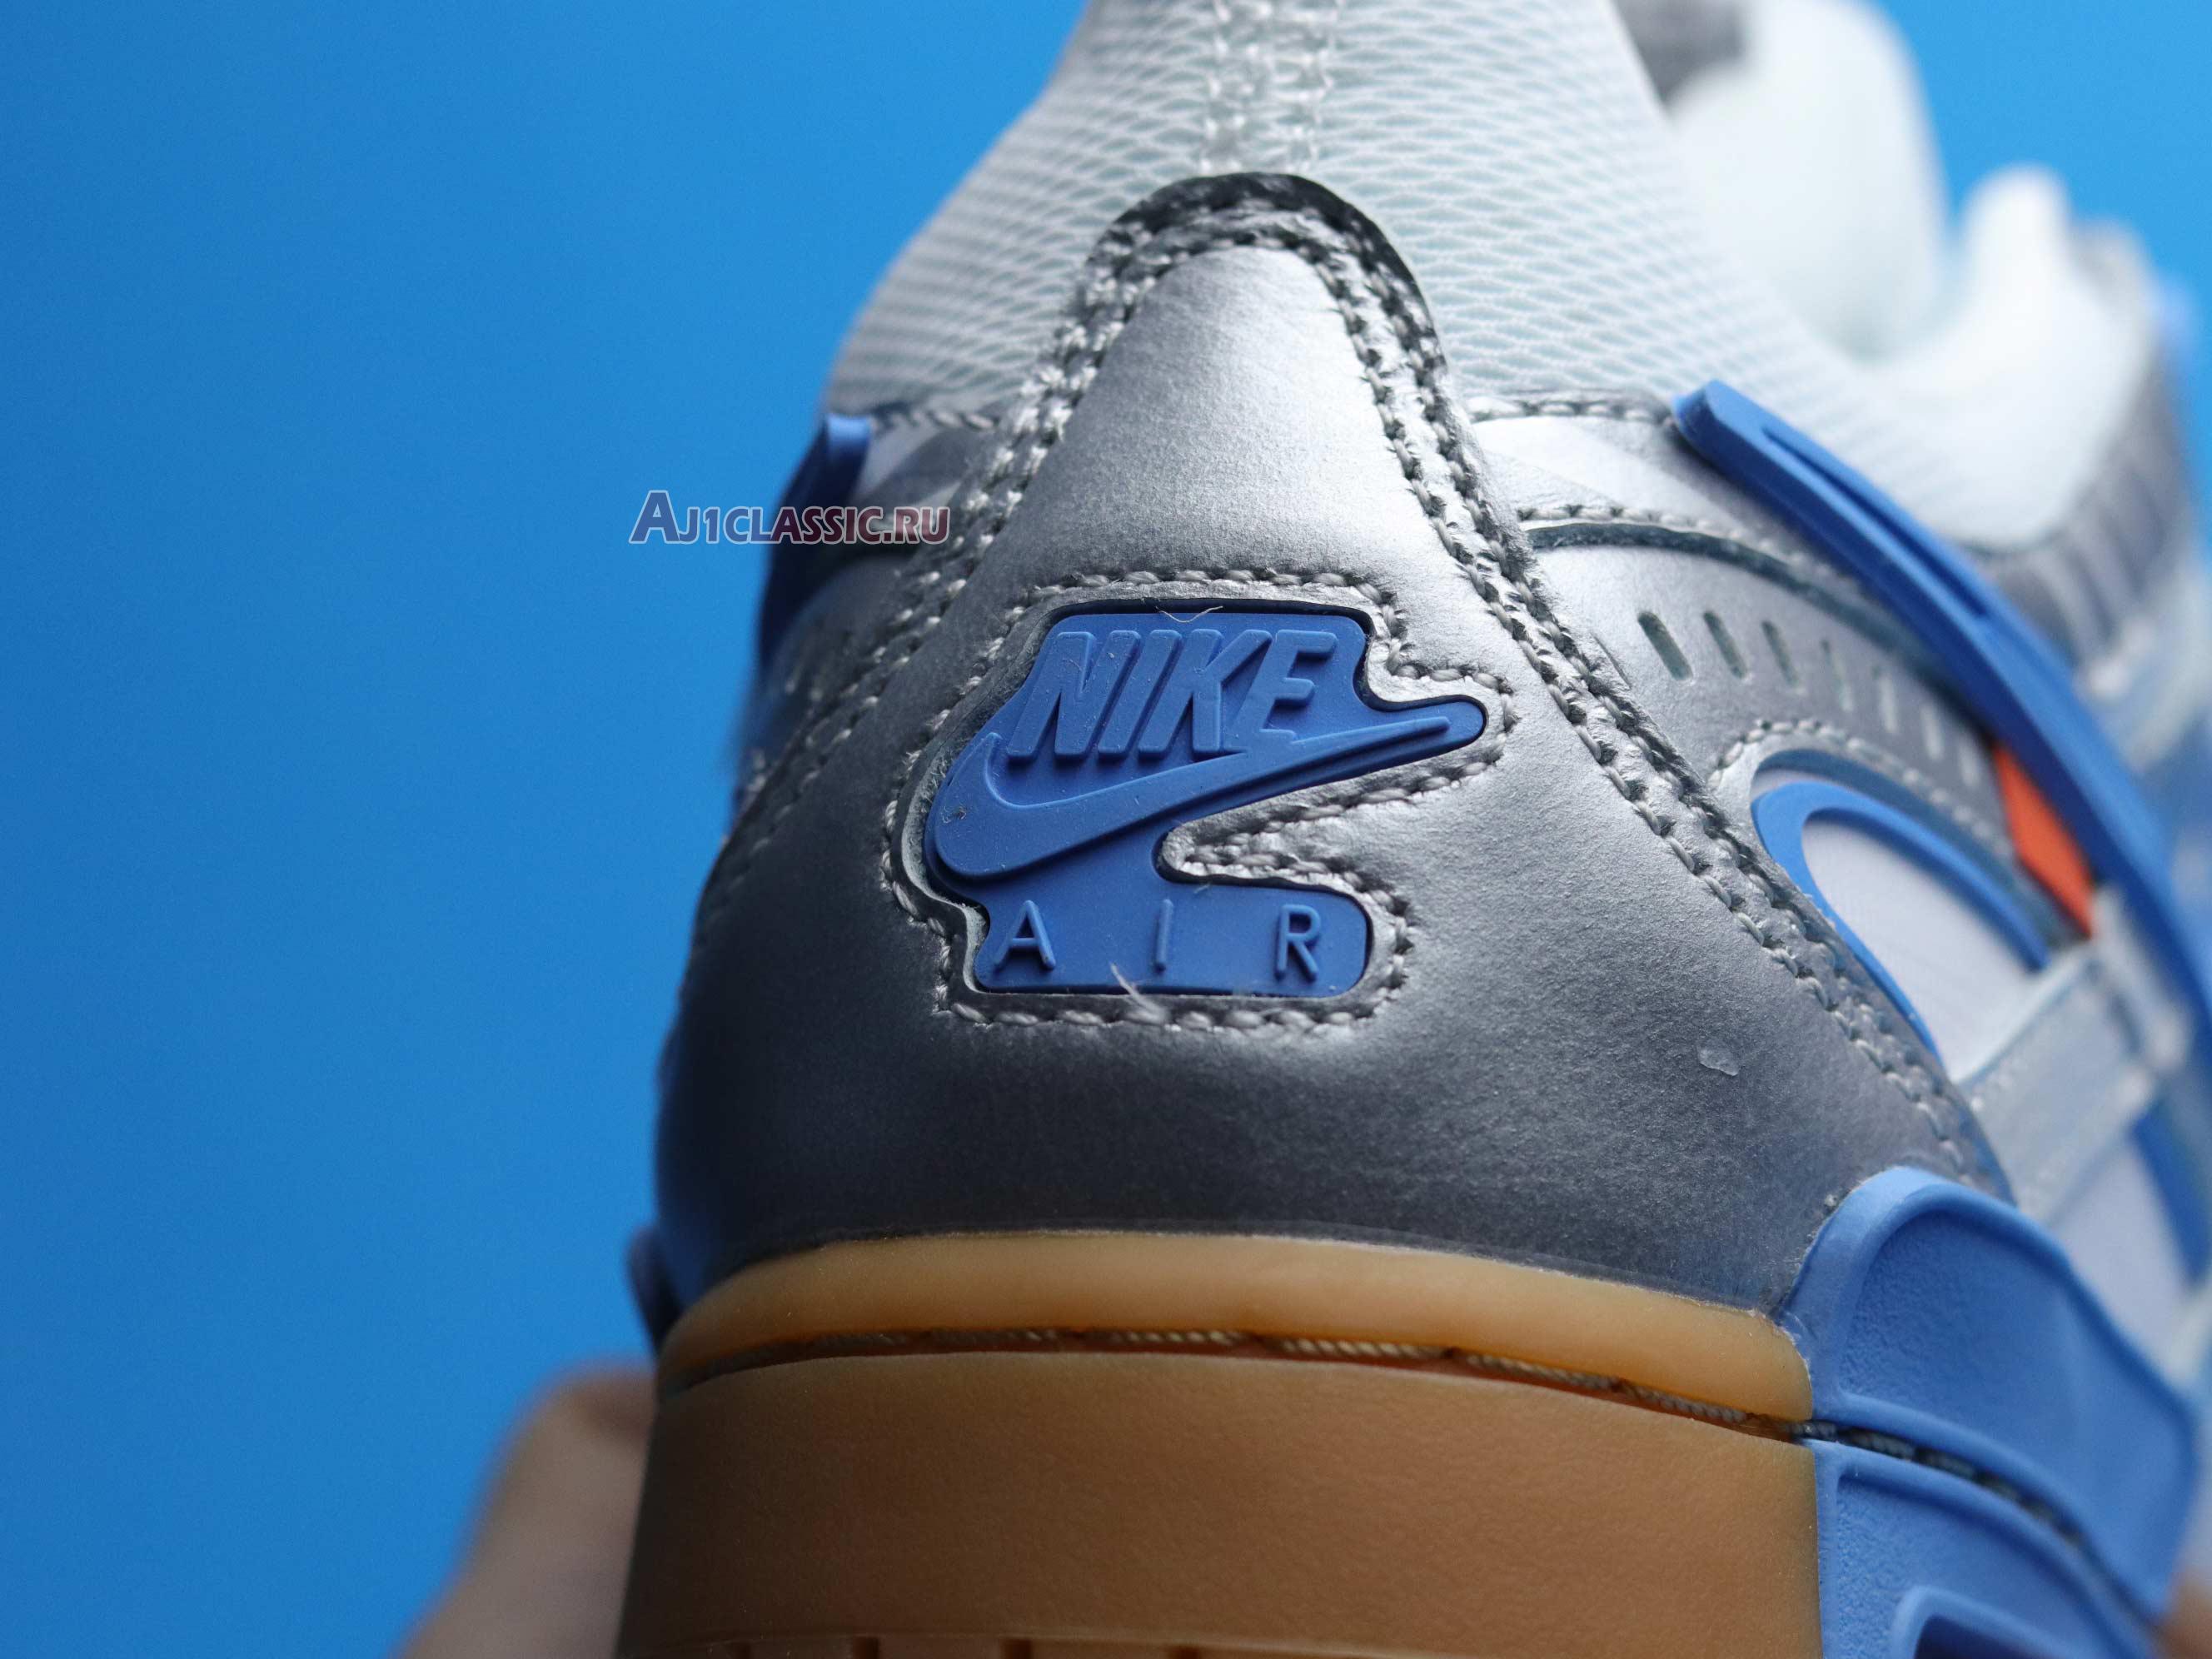 Off-White x Air Rubber Nike Dunk University Blue CU6015-100 Grey/University Blue Sneakers